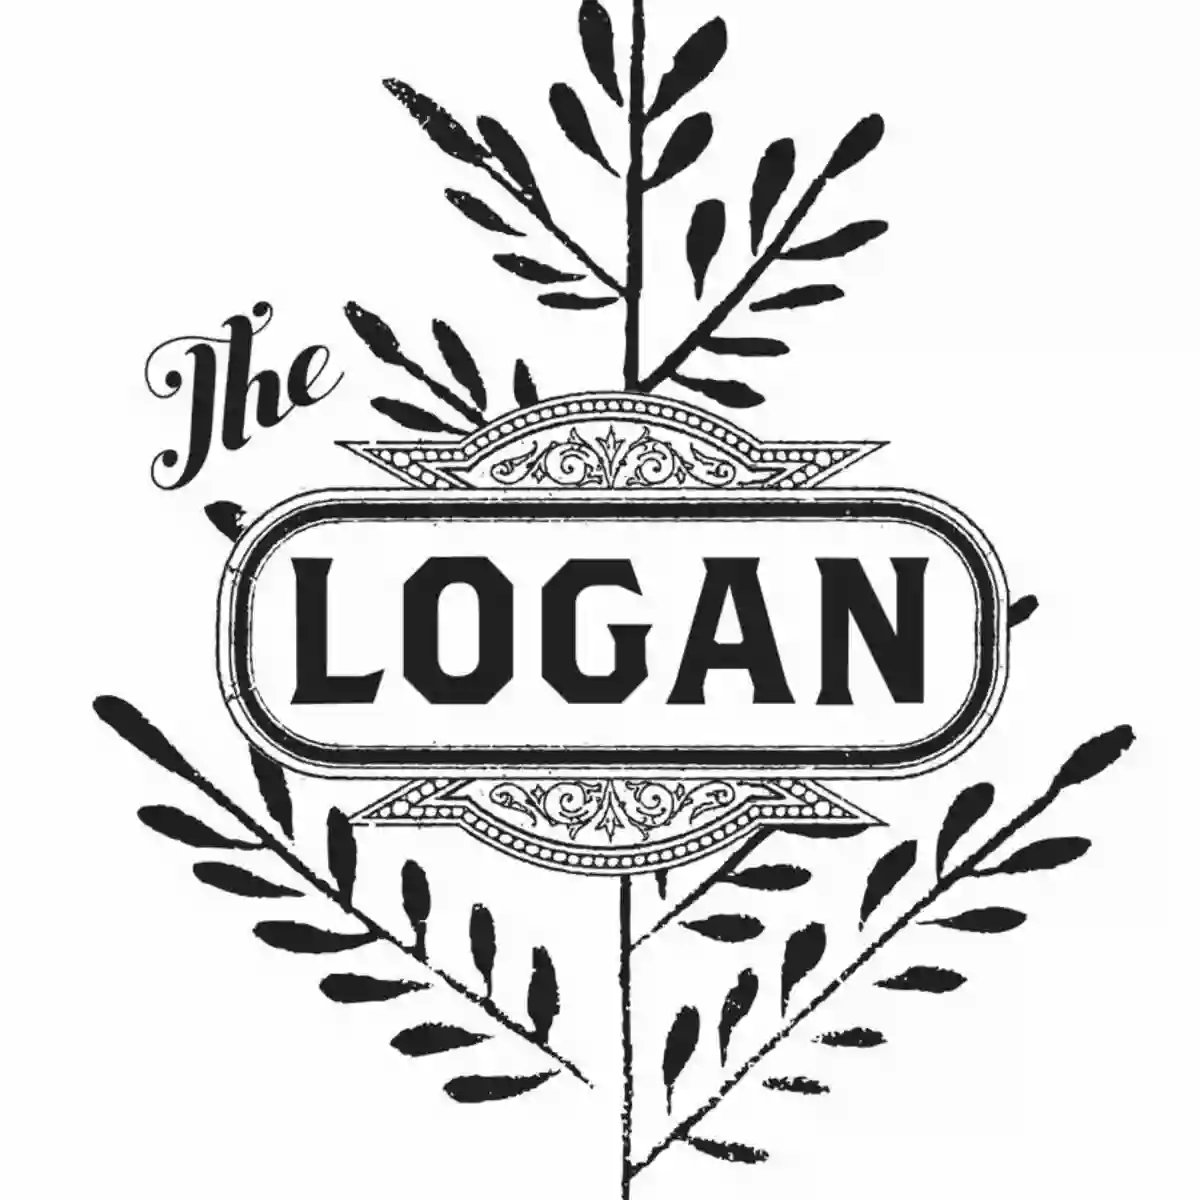 The Logan Apartments